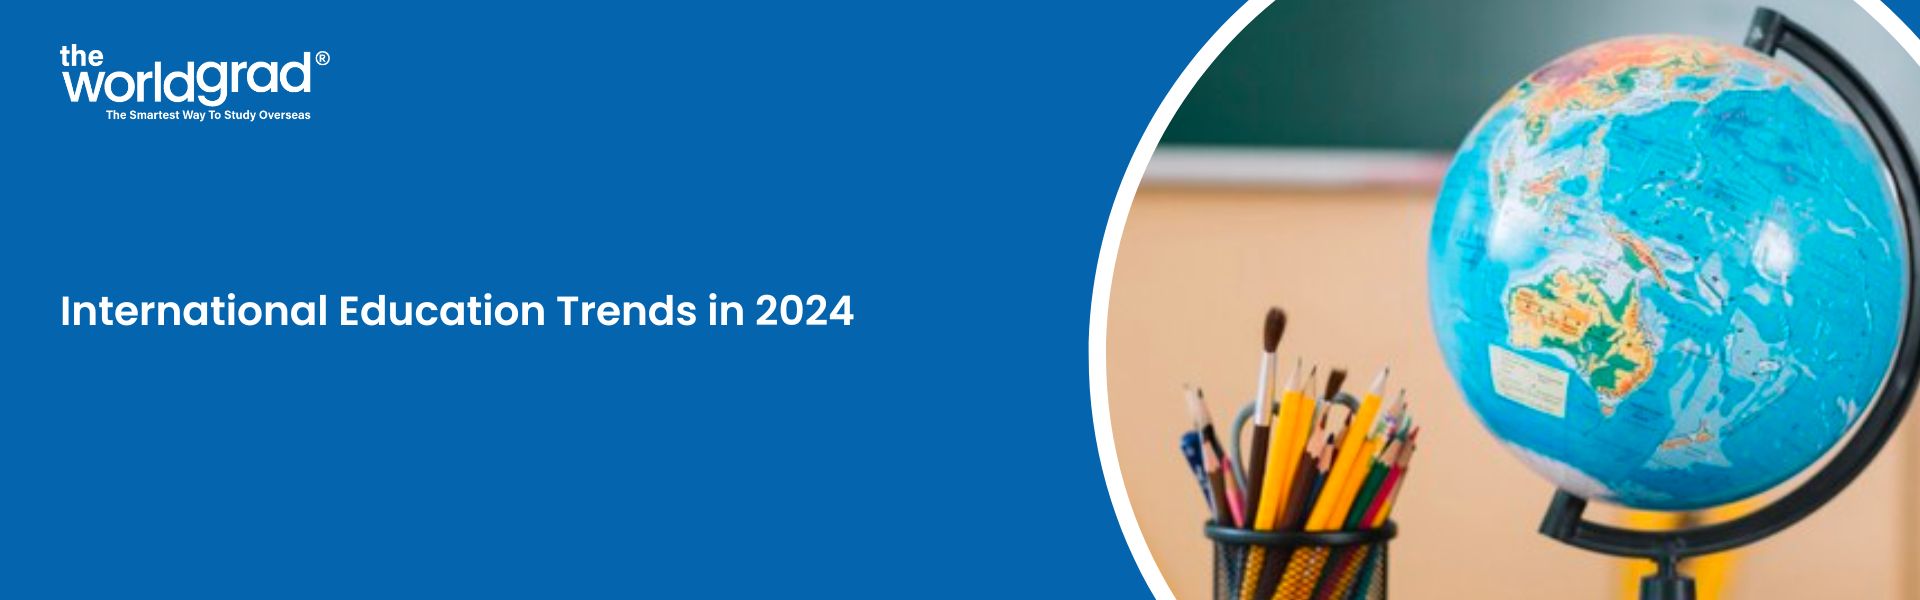 International Education Trends in 2024